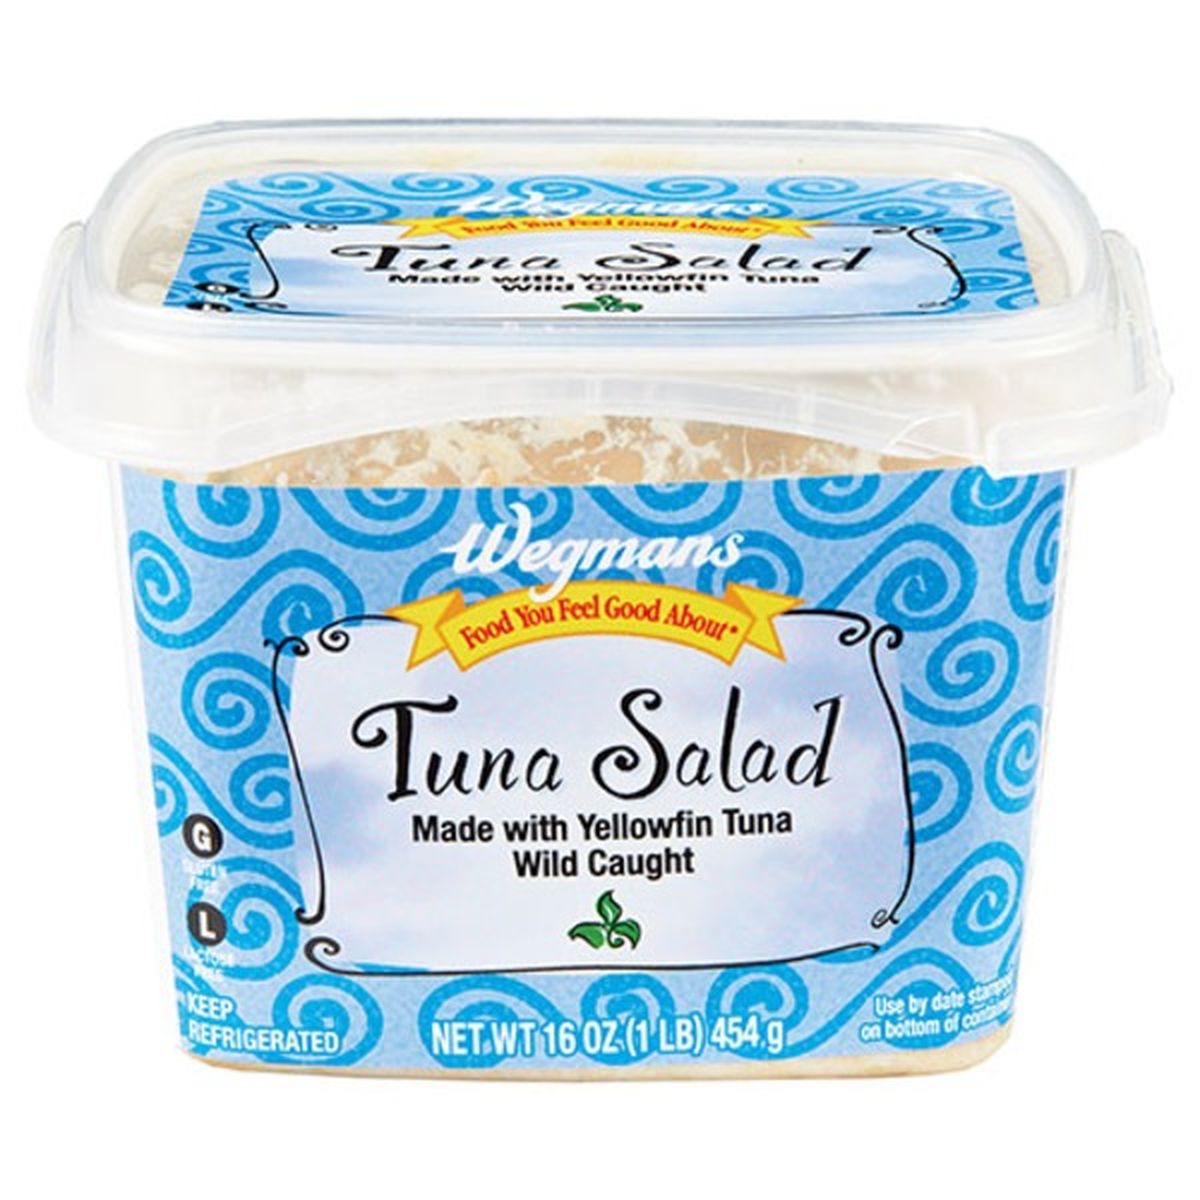 Calories in Wegmans Tuna Salad